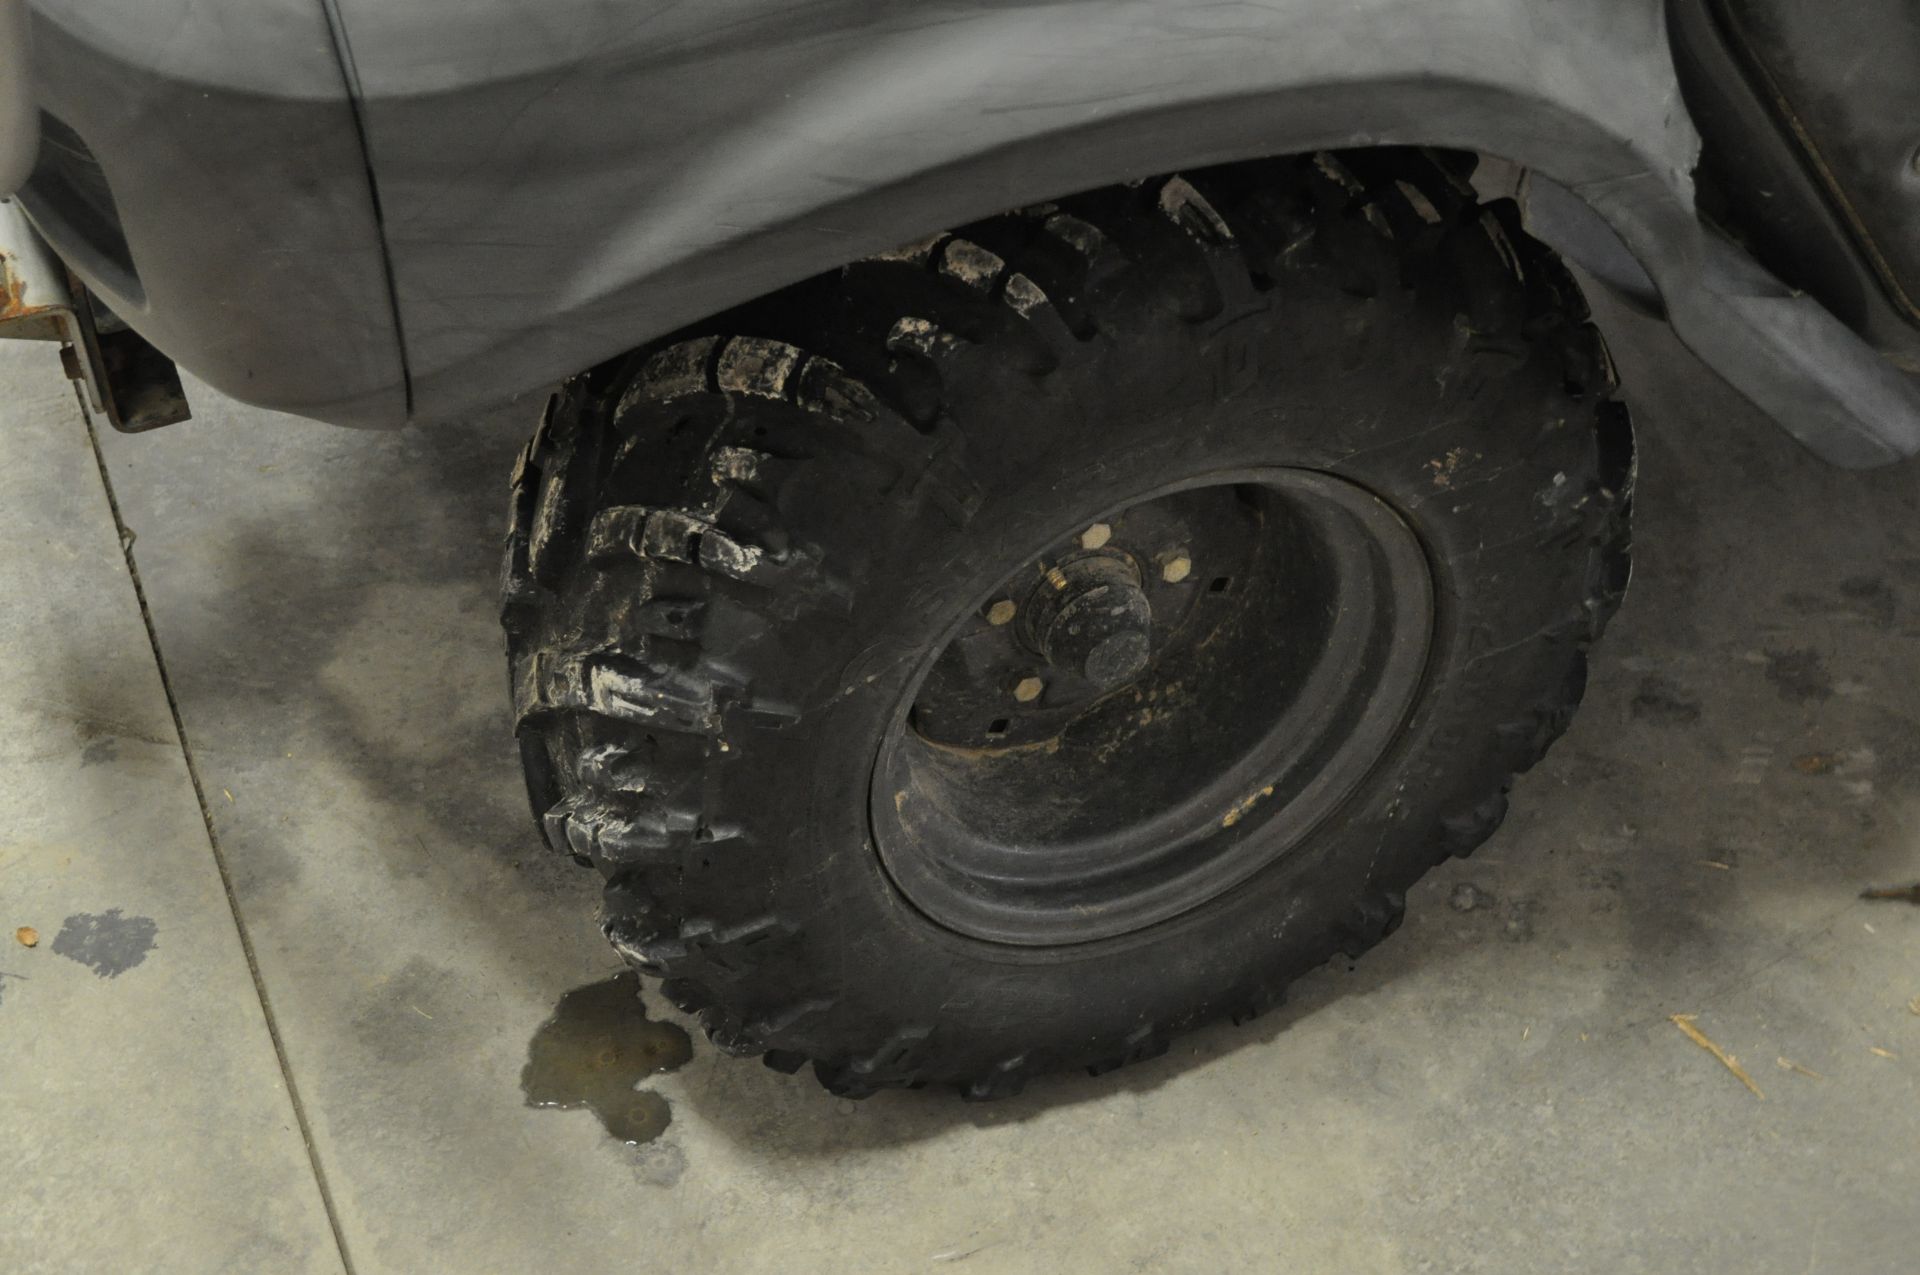 Kubota RTV 1100, 26x12 R 12 tires, C/H/A, radio, 4x4, hyd dump bed, 1070 hrs - Image 5 of 23